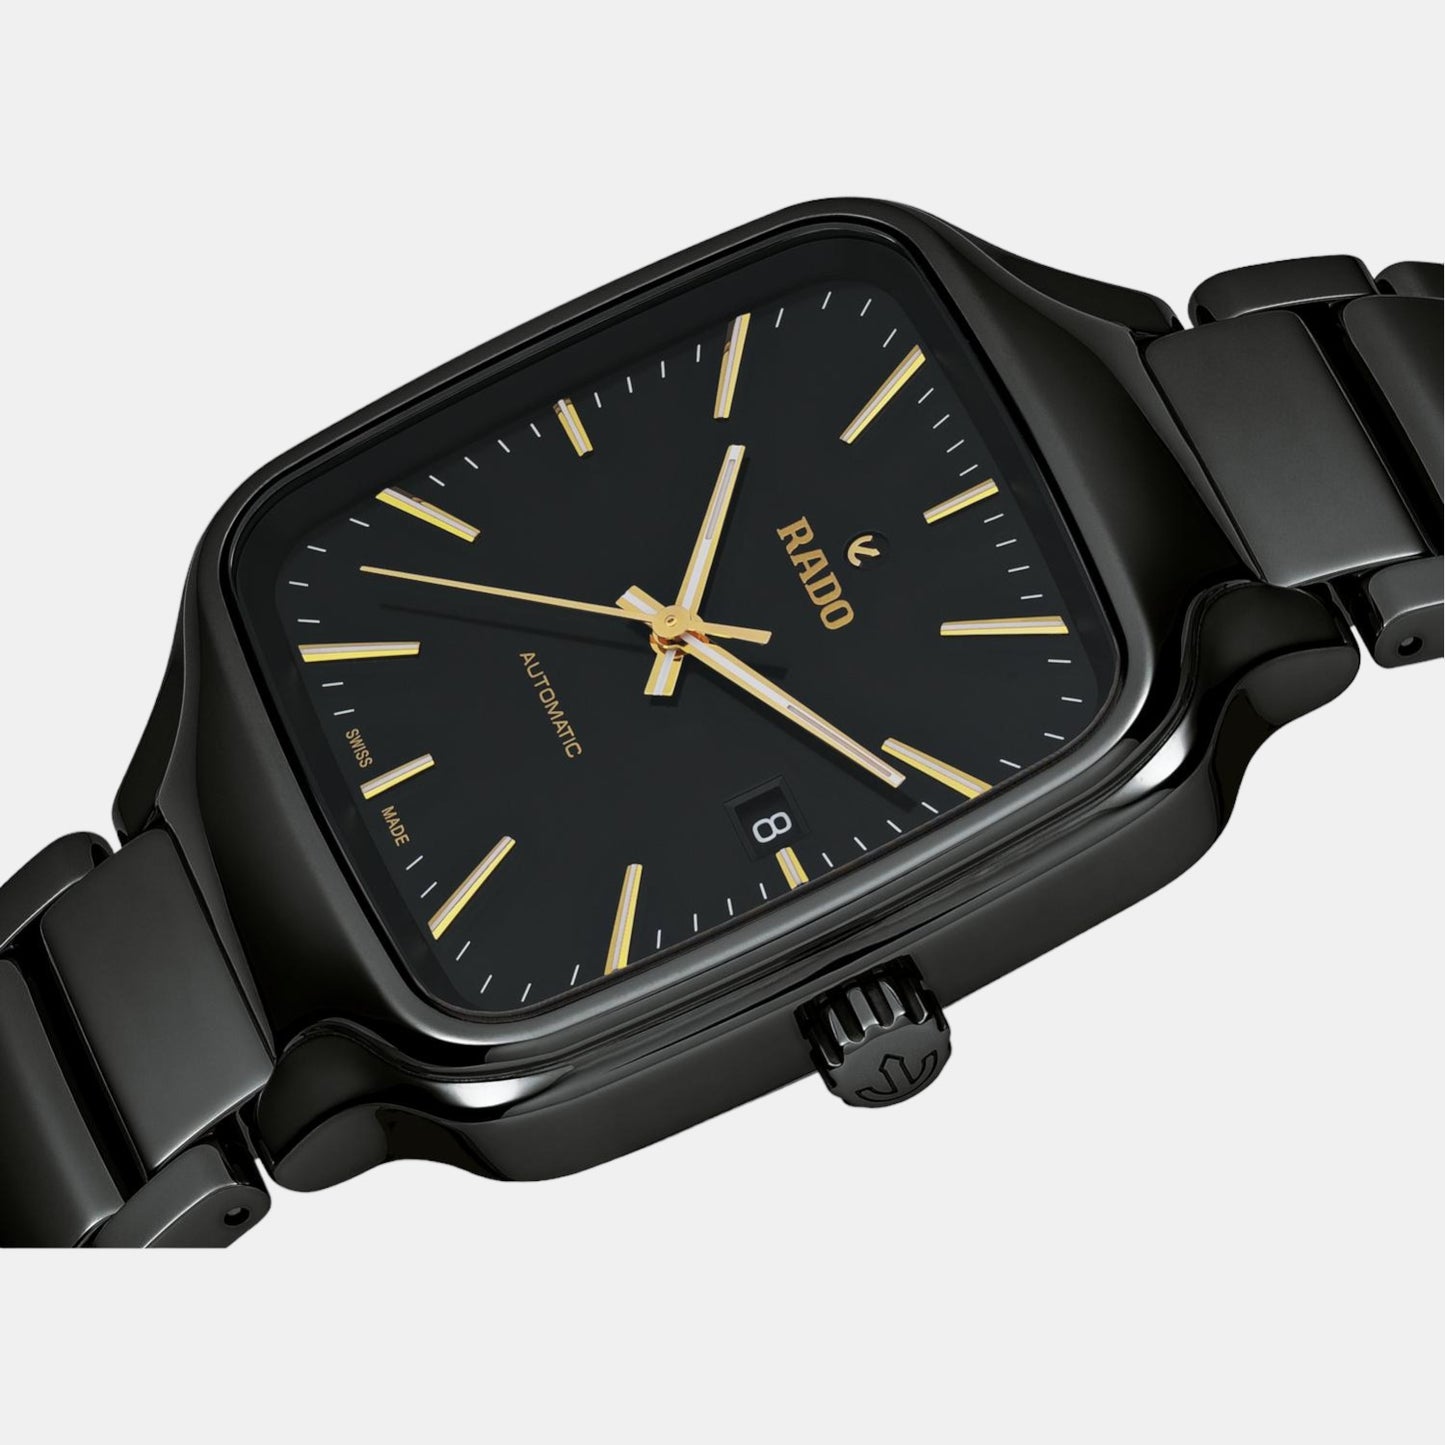 rado-ceramic-black-analog-unisex-adult-watch-r27078162